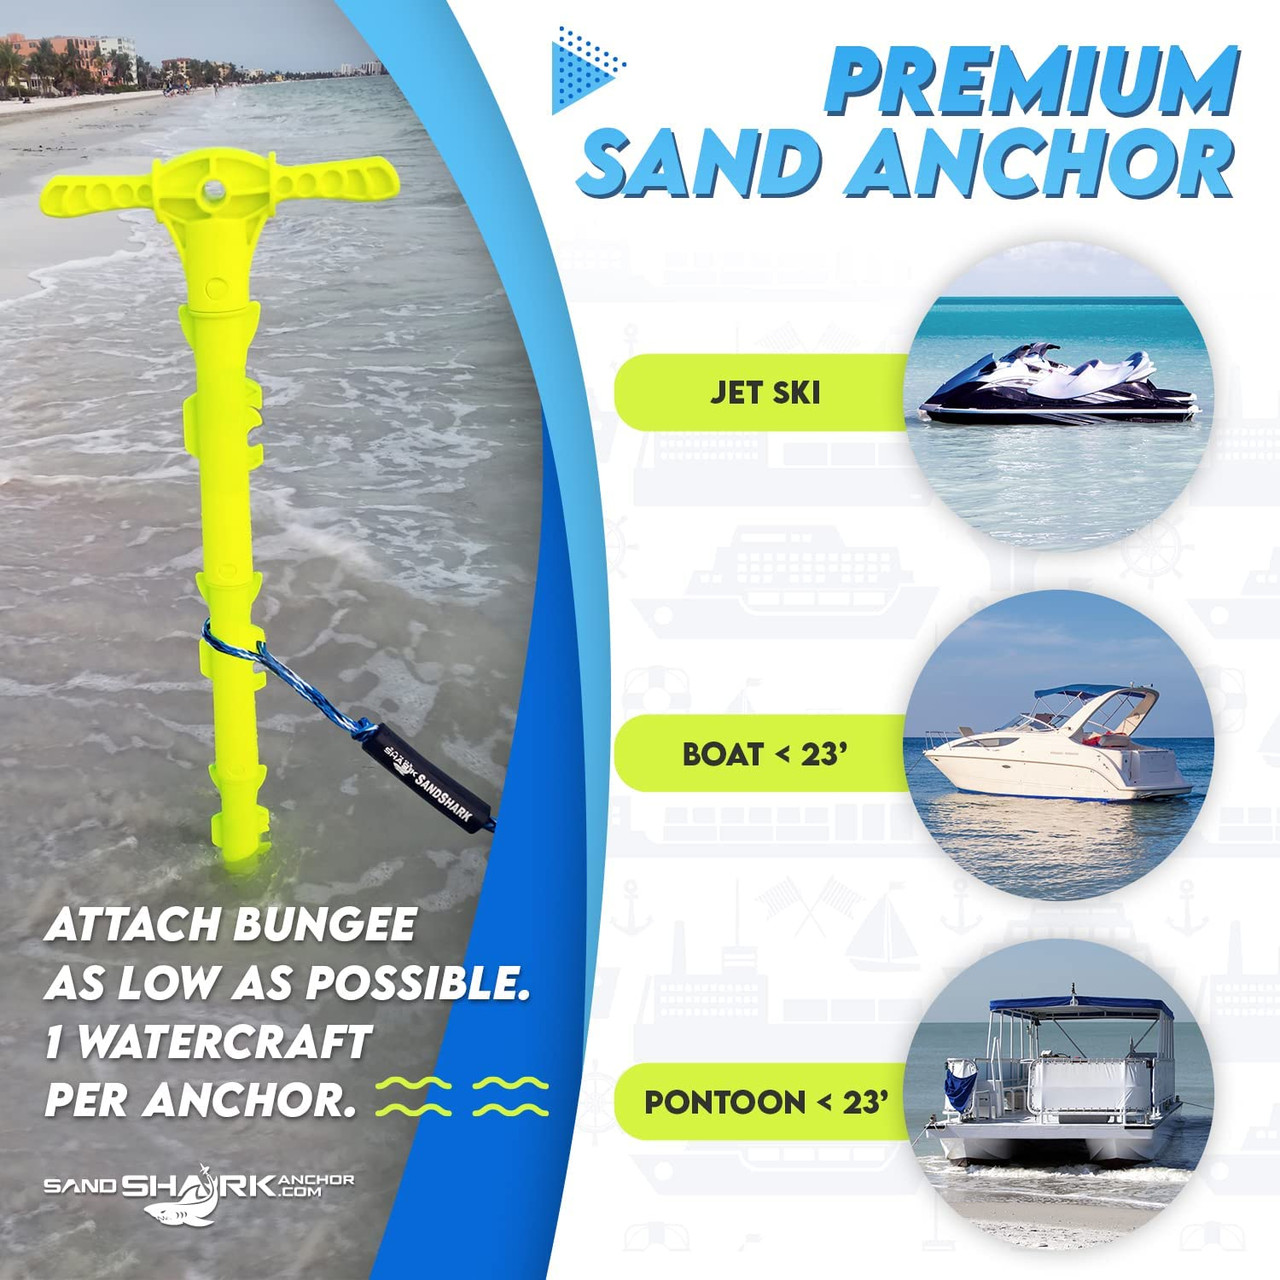 New Sport Sand Shallow Water Beach Anchor by SandShark. Boats